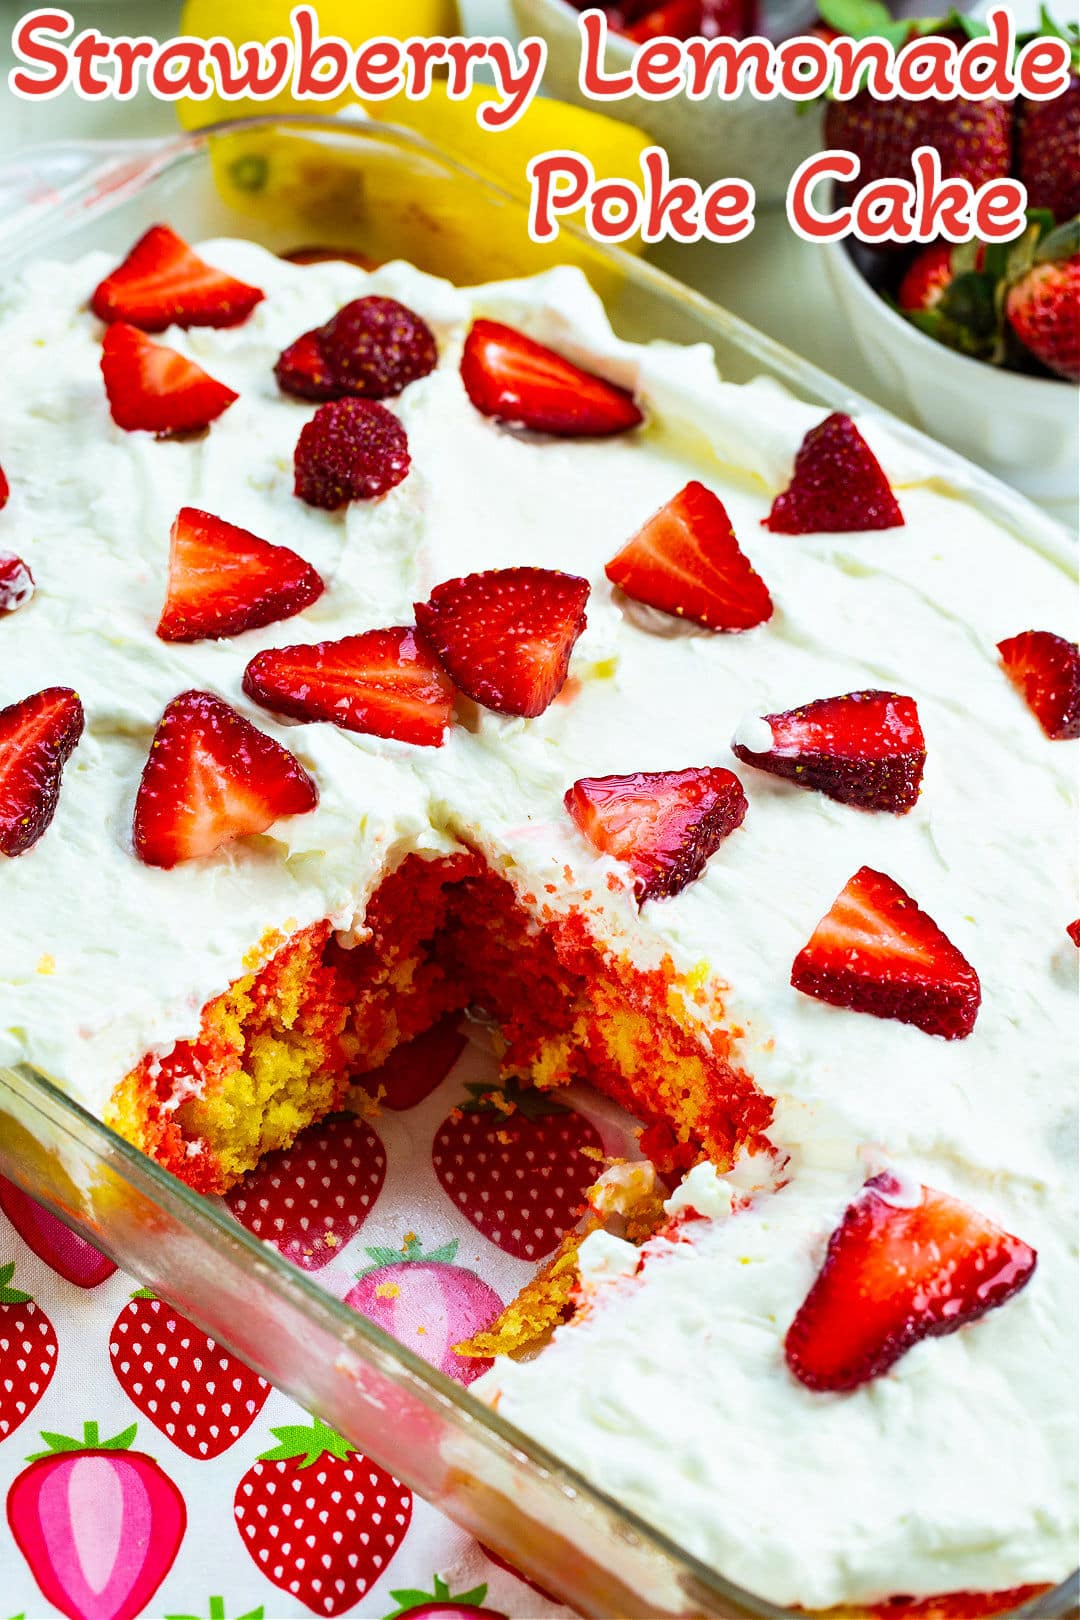 Strawberry Lemonade Poke Cake in baking dish.